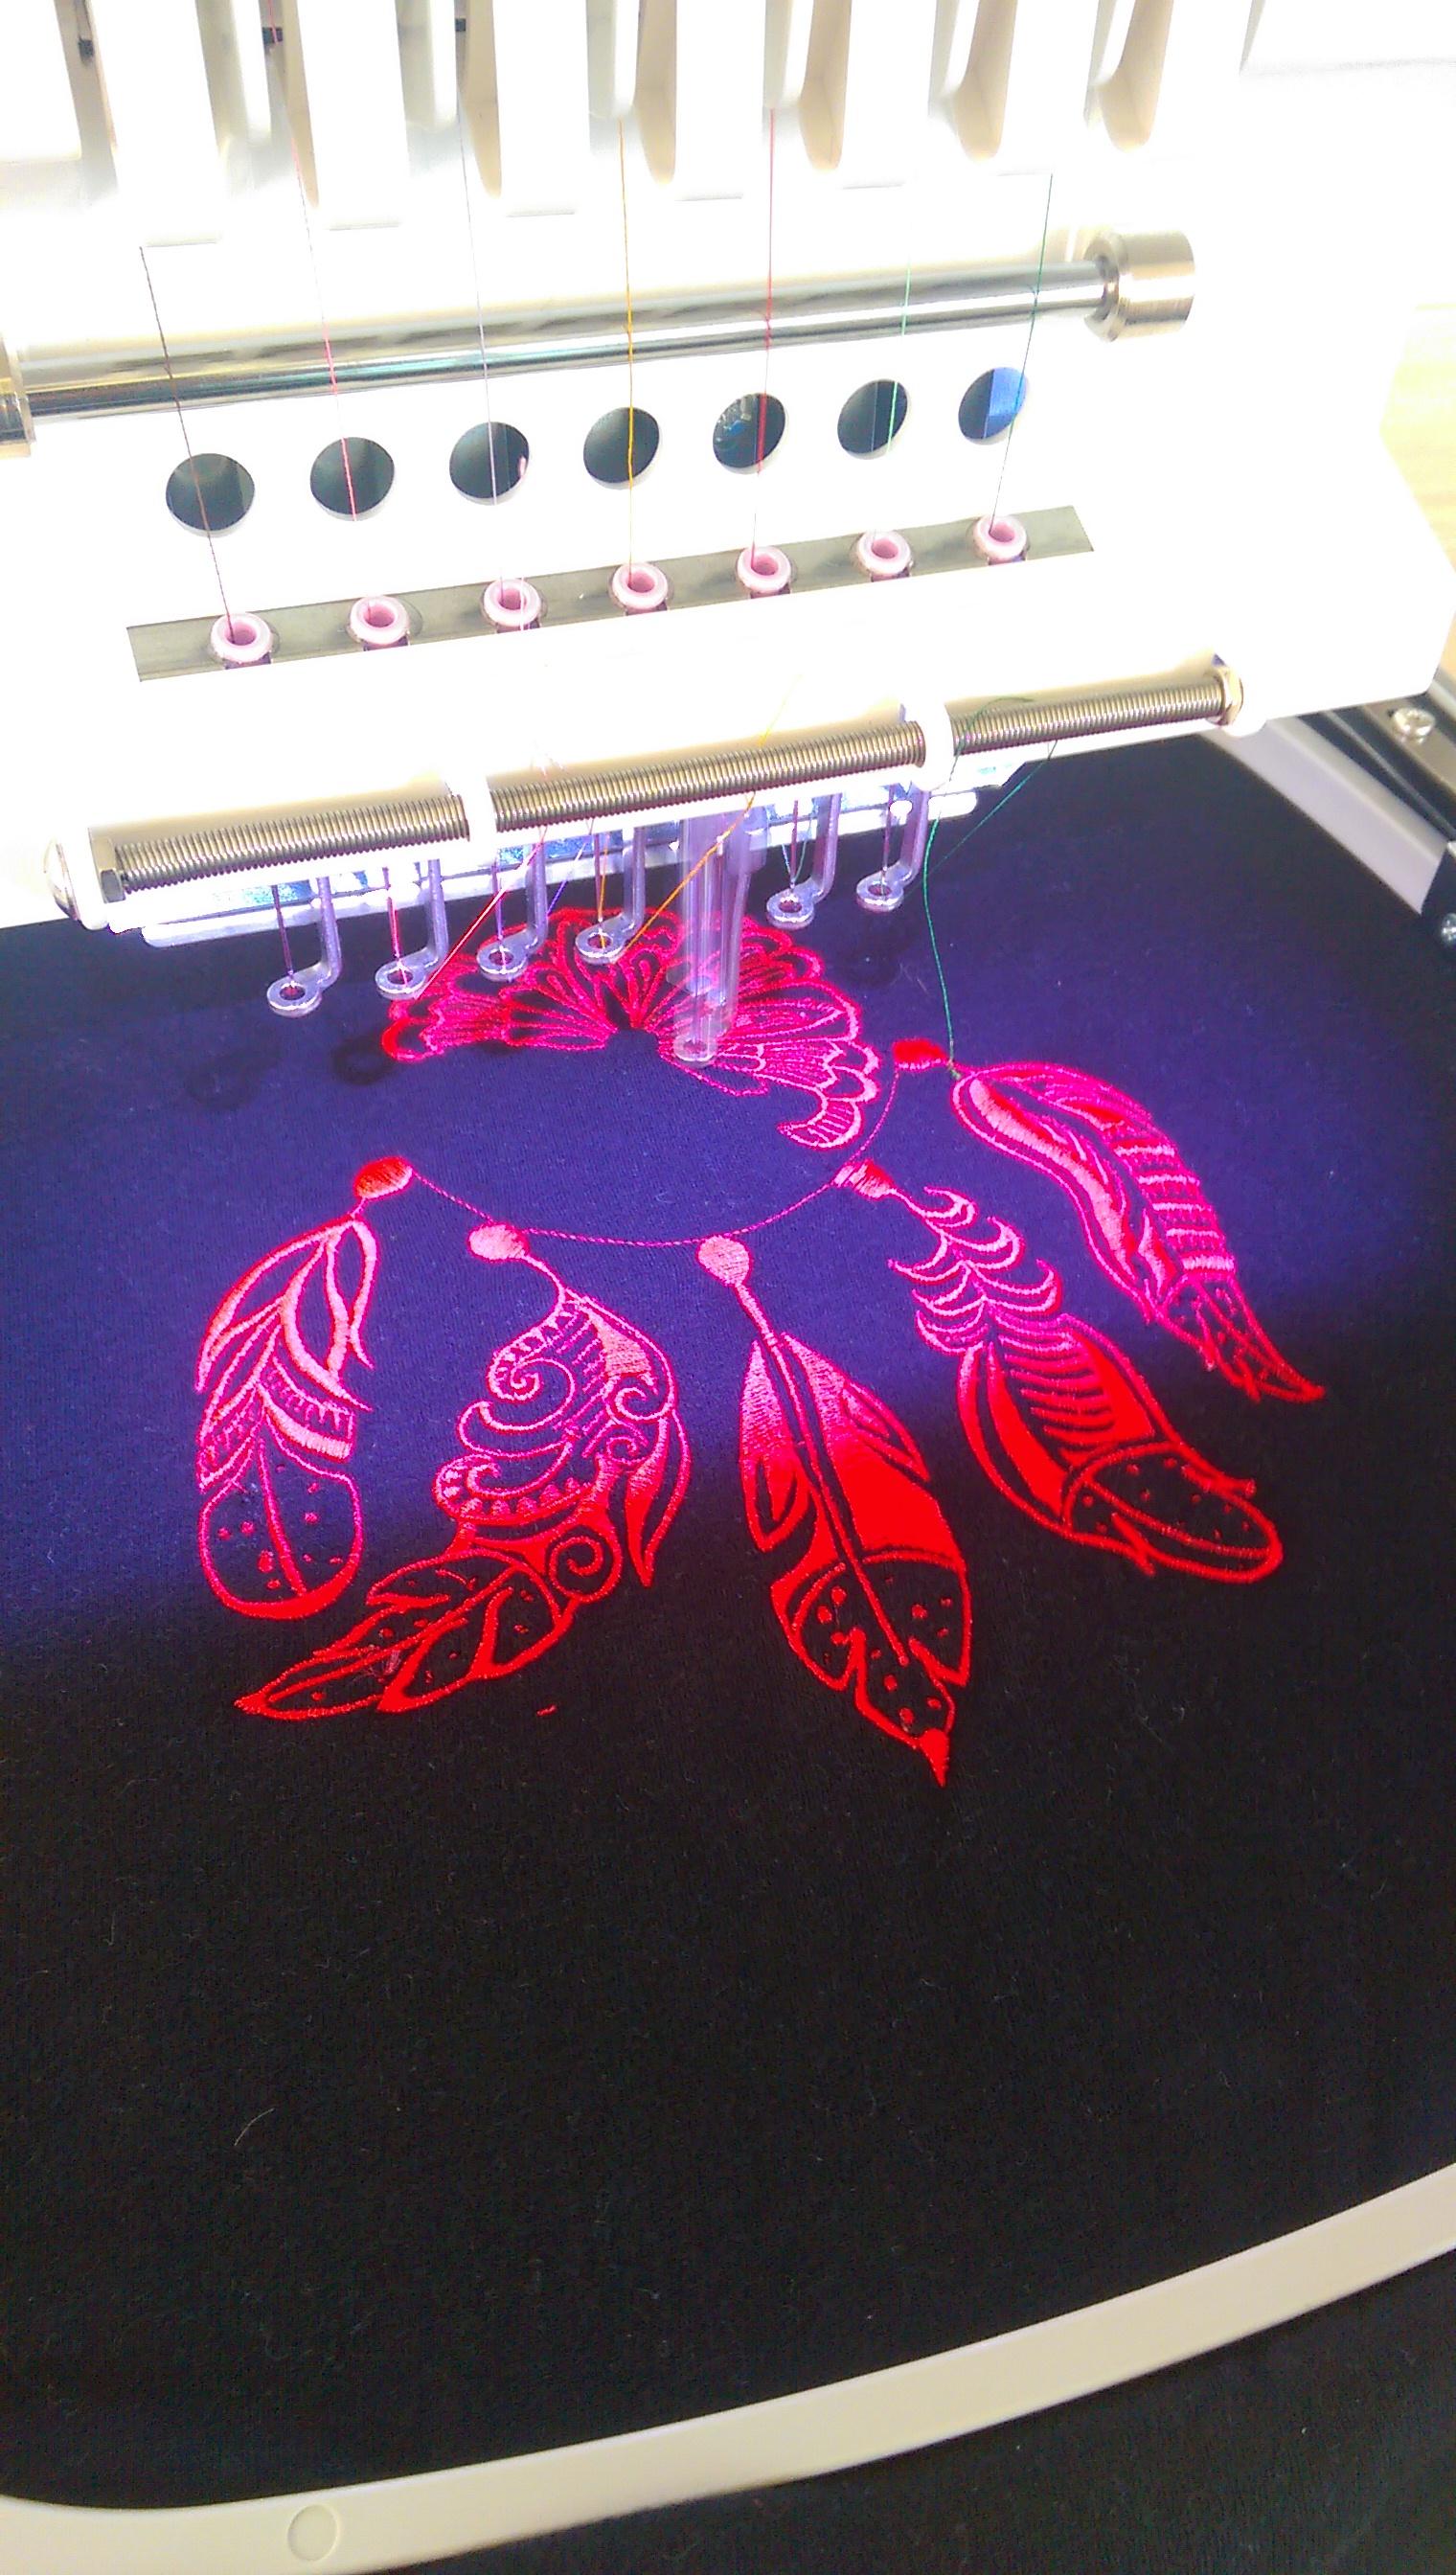 Work on Dreamcatcher embroidery design